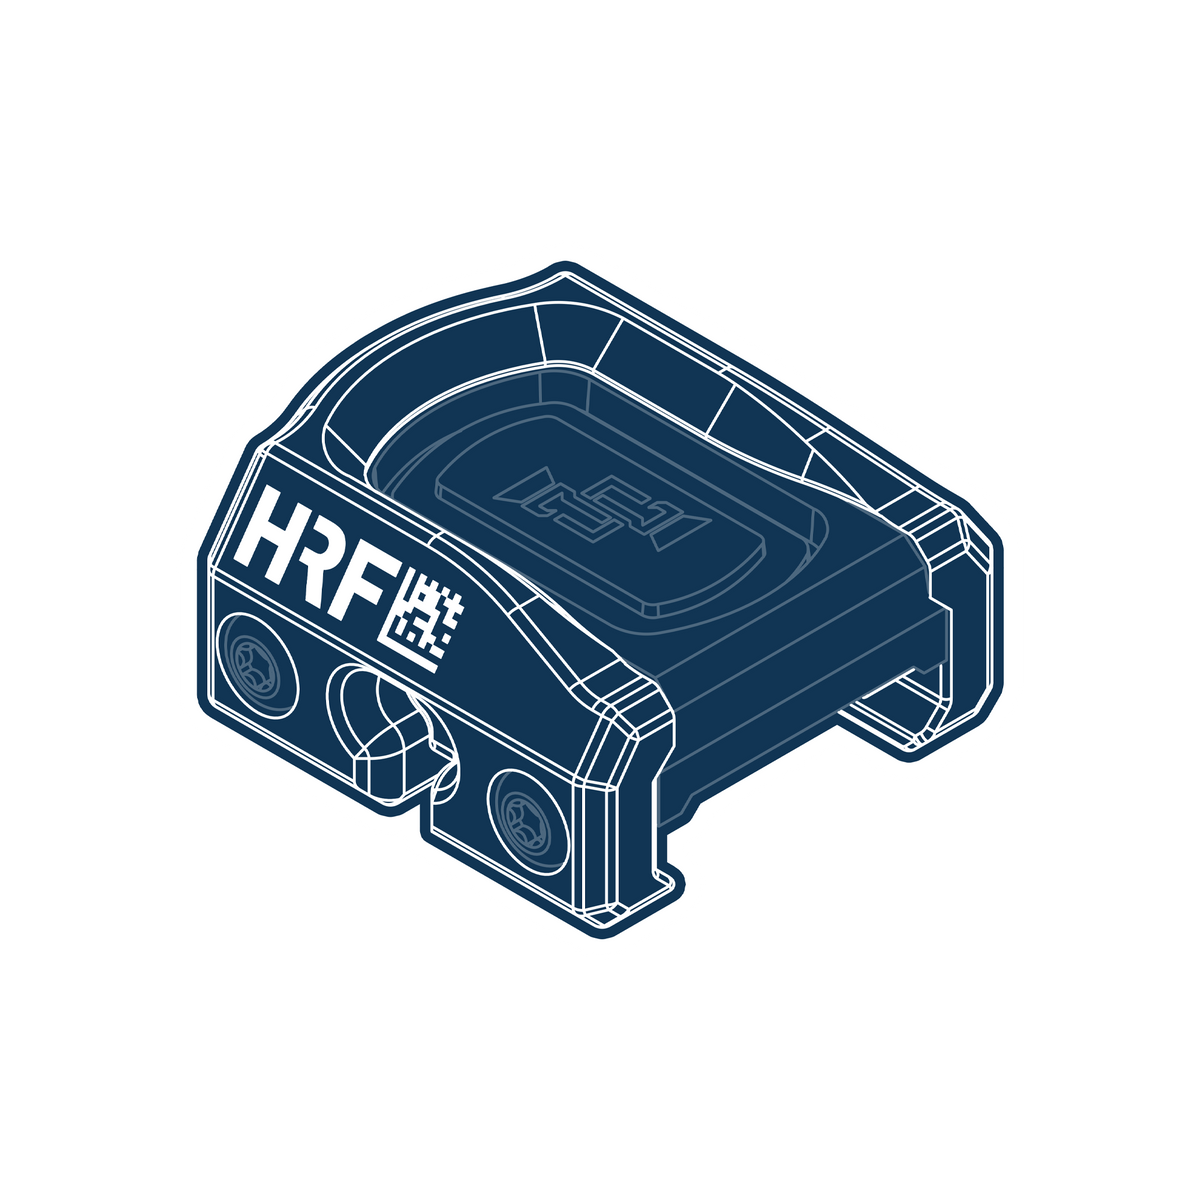 RIDGE – HRF Concepts